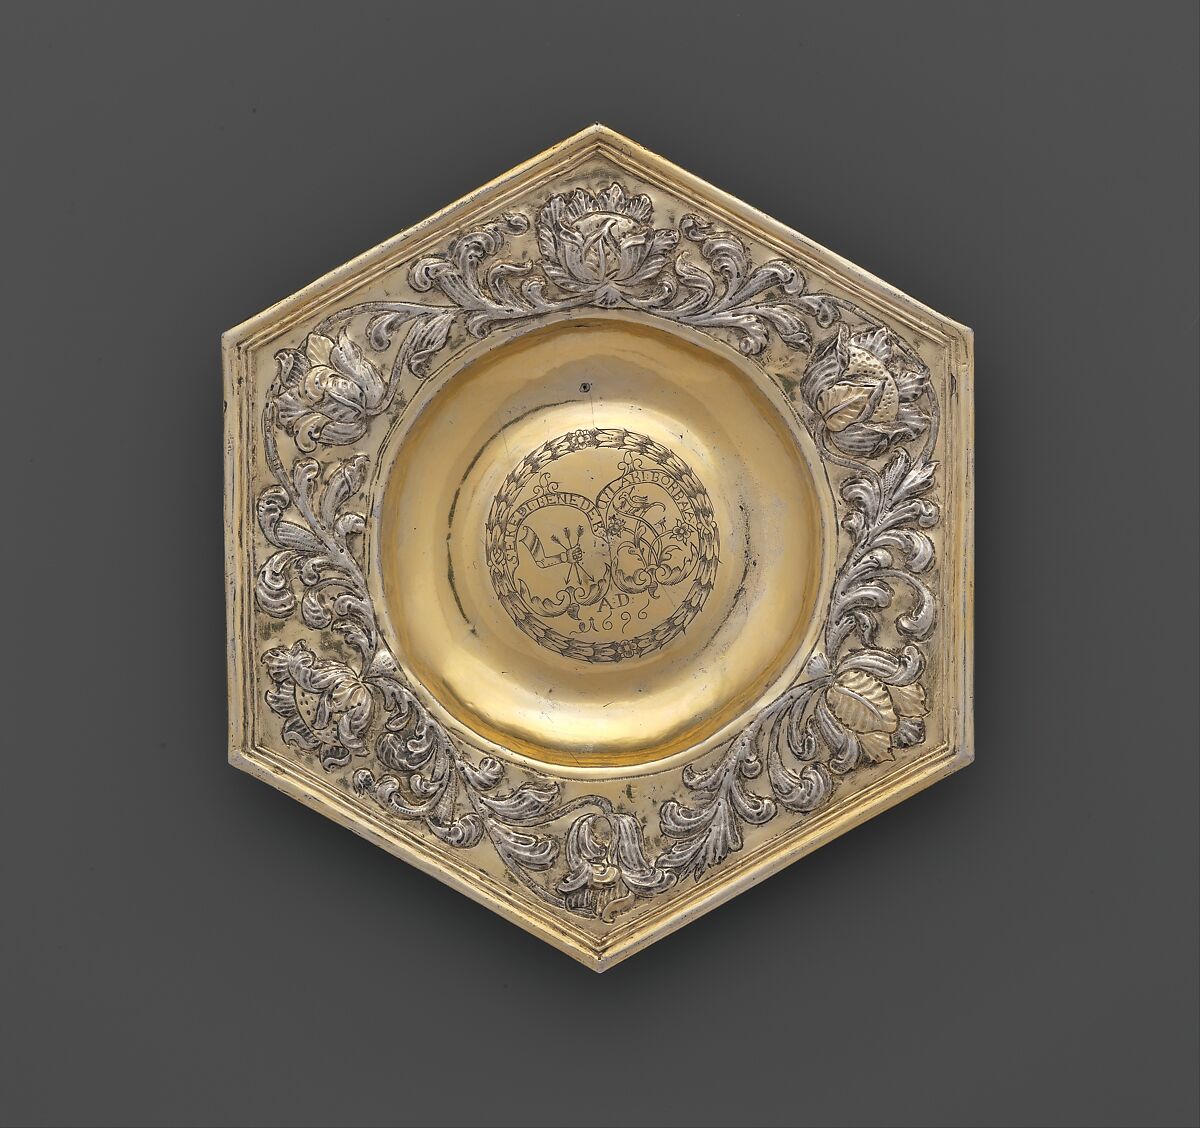 Hexagonal dish, Silver, partly gilded, Hungarian, Transylvania 